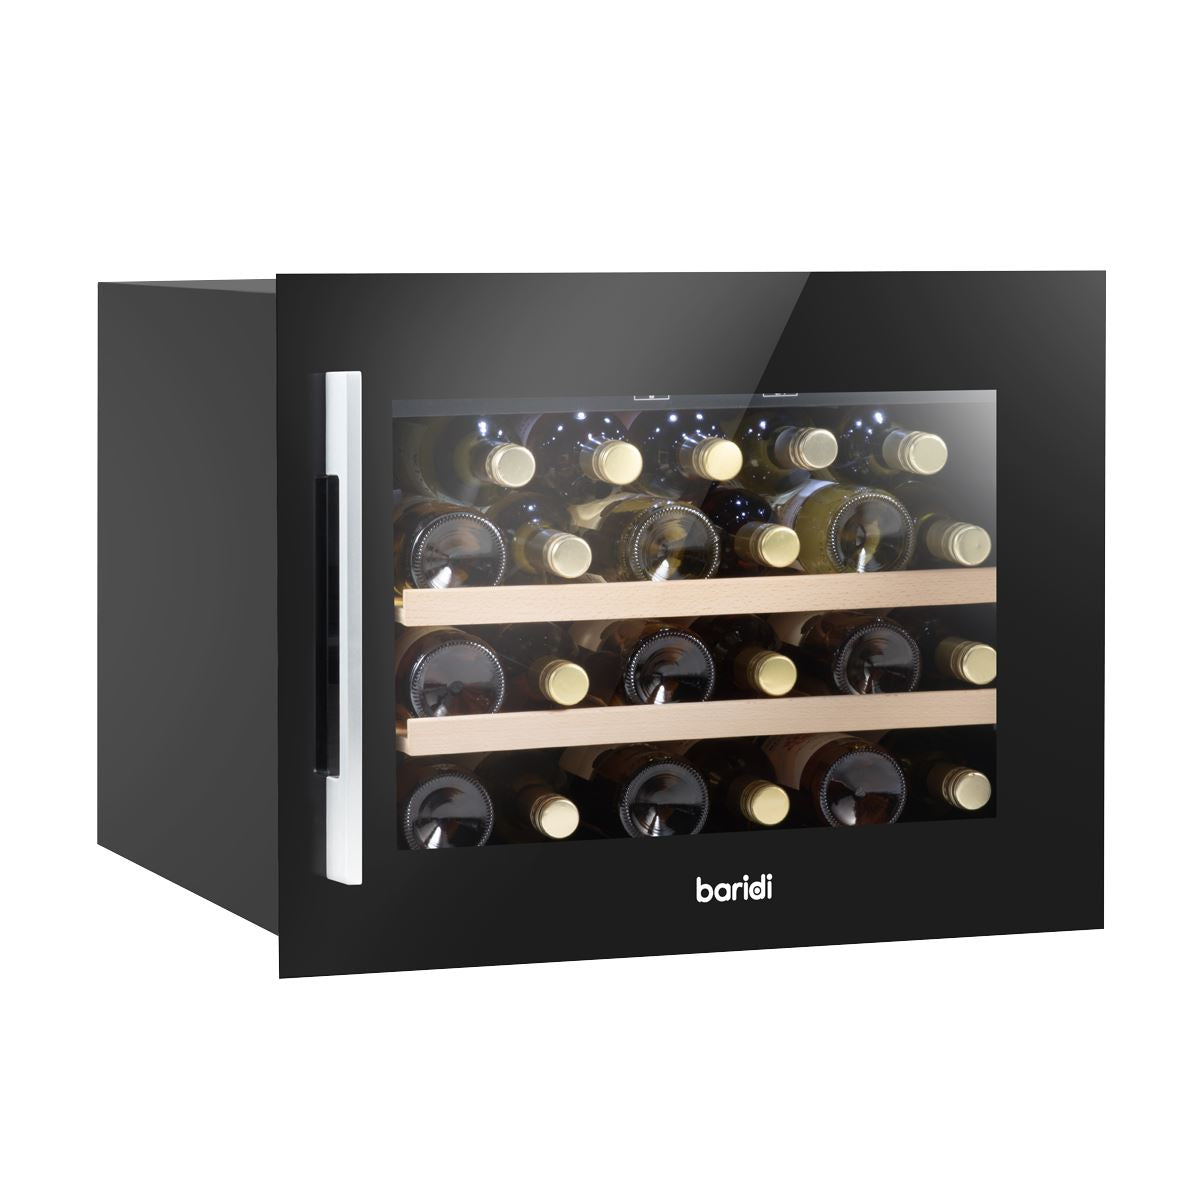 Baridi 60cm Built-In 28 Bottle Wine Cooler with Beech Wood Shelves and Internal LED Light, Black